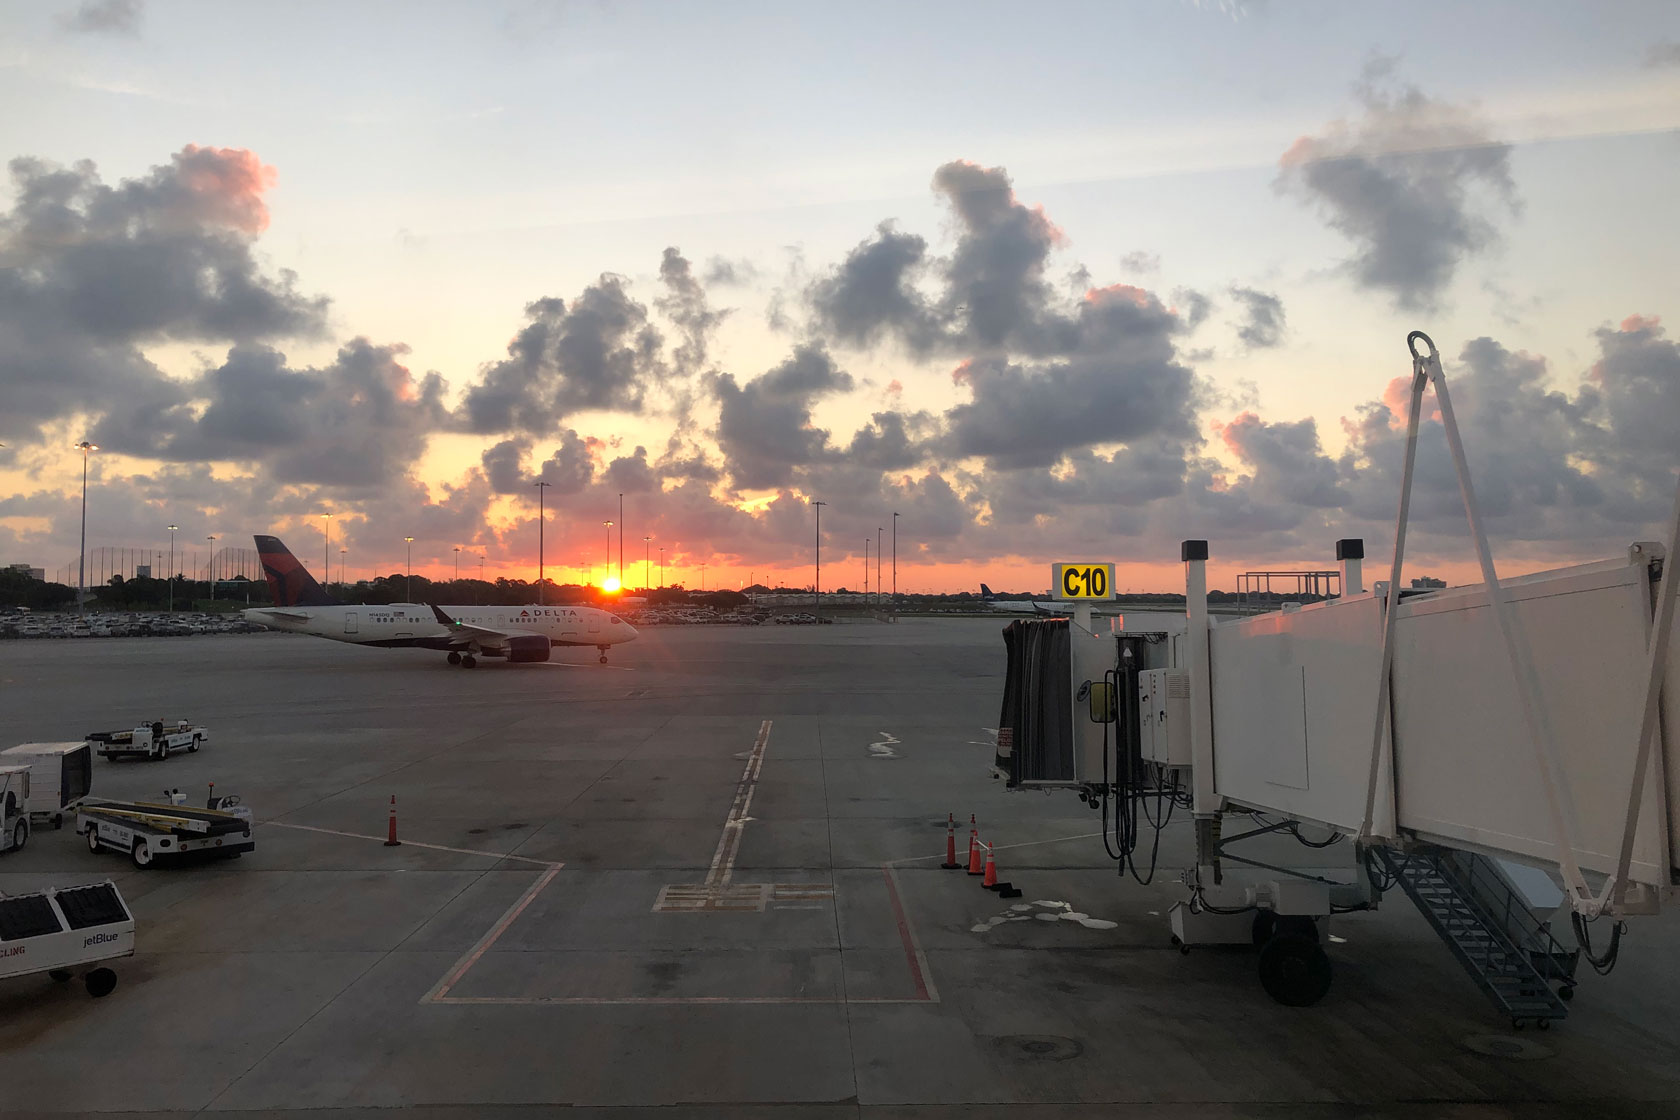 Sunrise at West Palm Beach International Airport